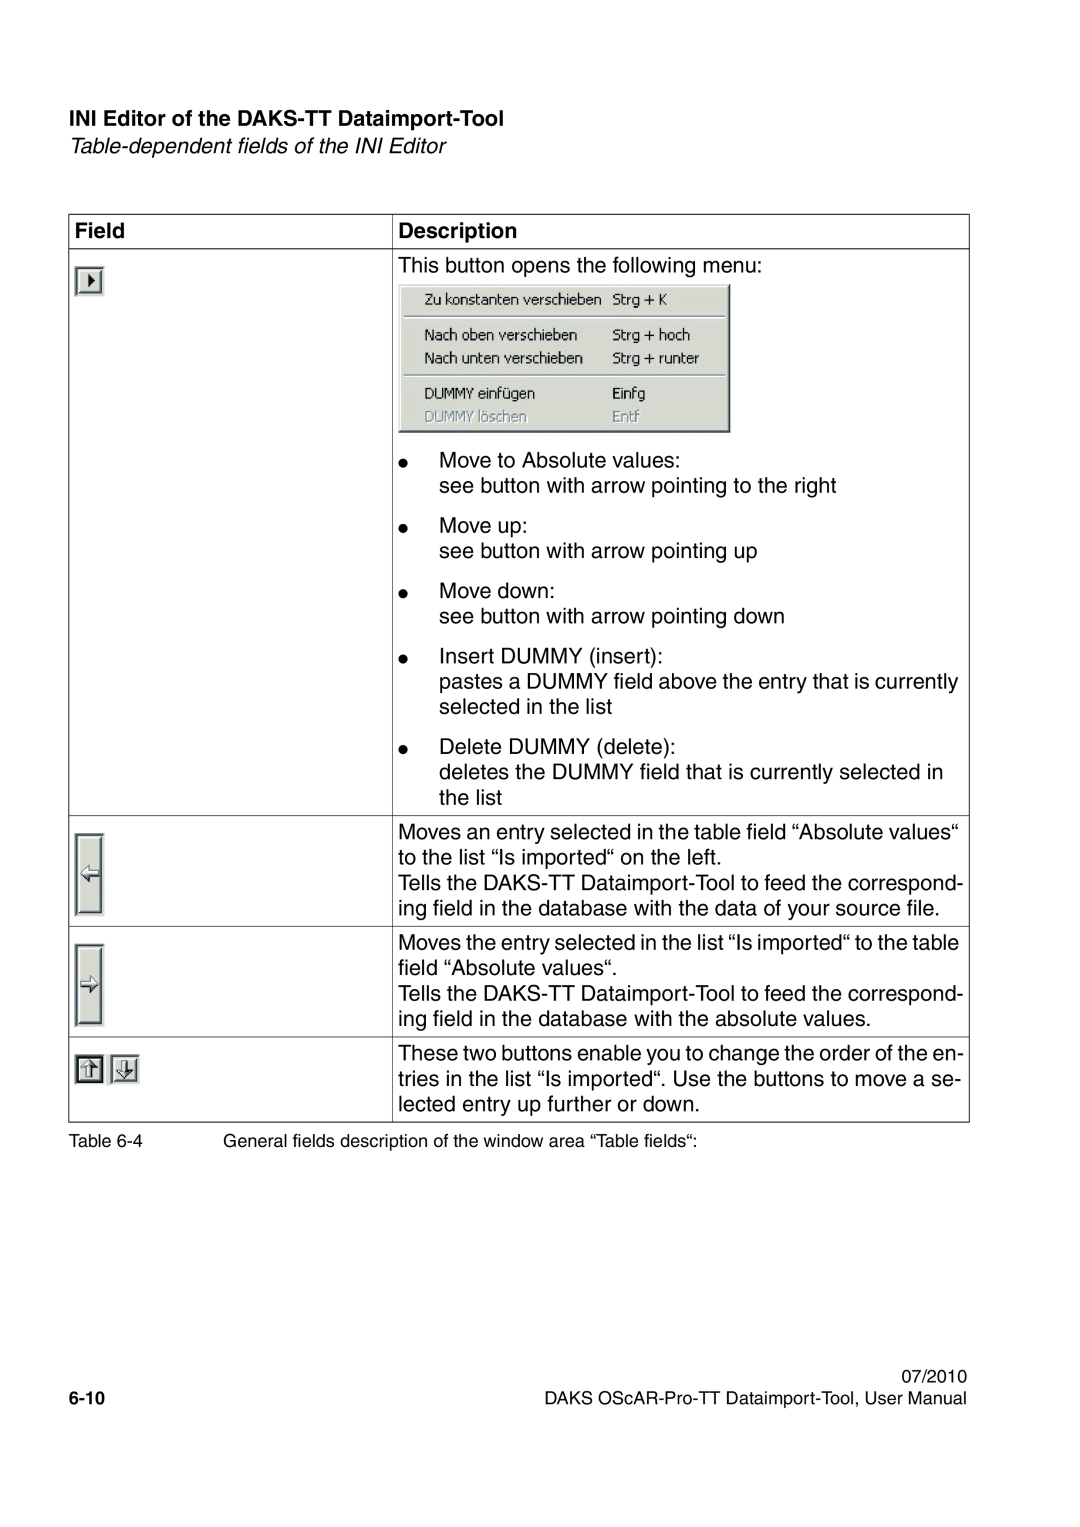 Siemens A31003-S1730-U102-1-7619 user manual INI Editor of the DAKS-TT Dataimport-Tool, Field, Description 